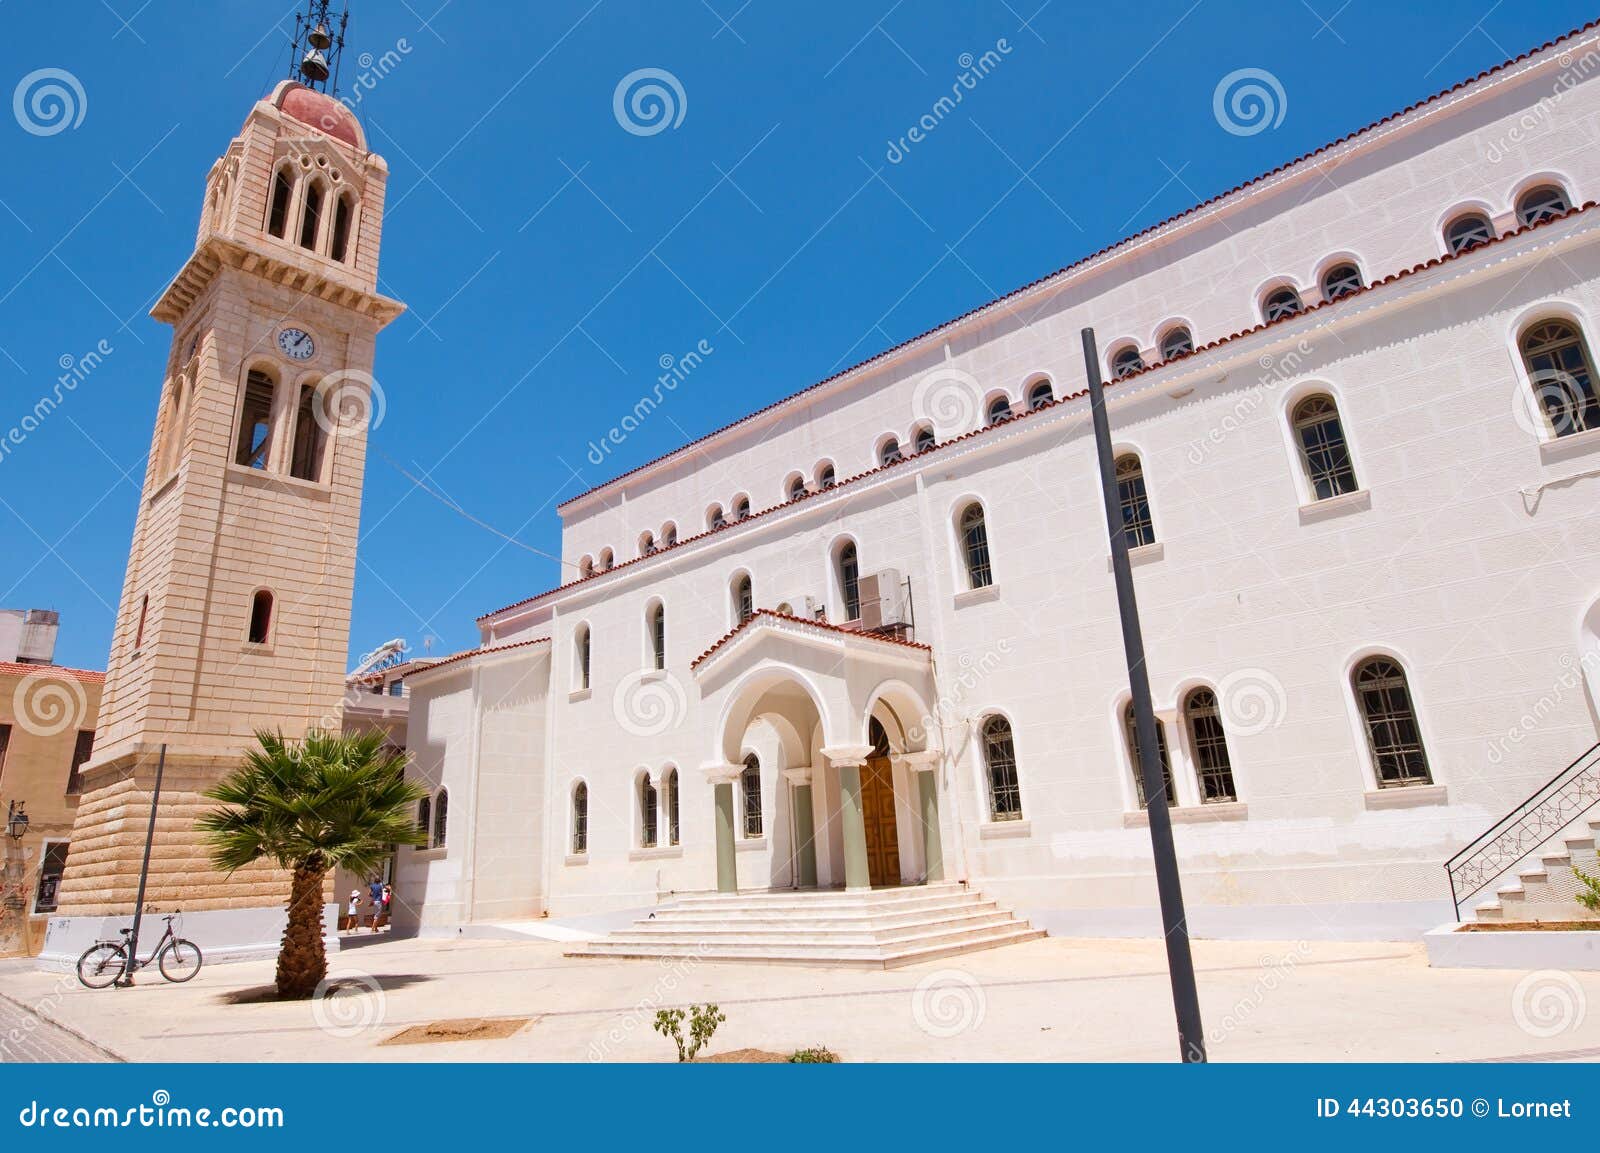 megalos antonios church in rethymnon city on the island of crete, greece.